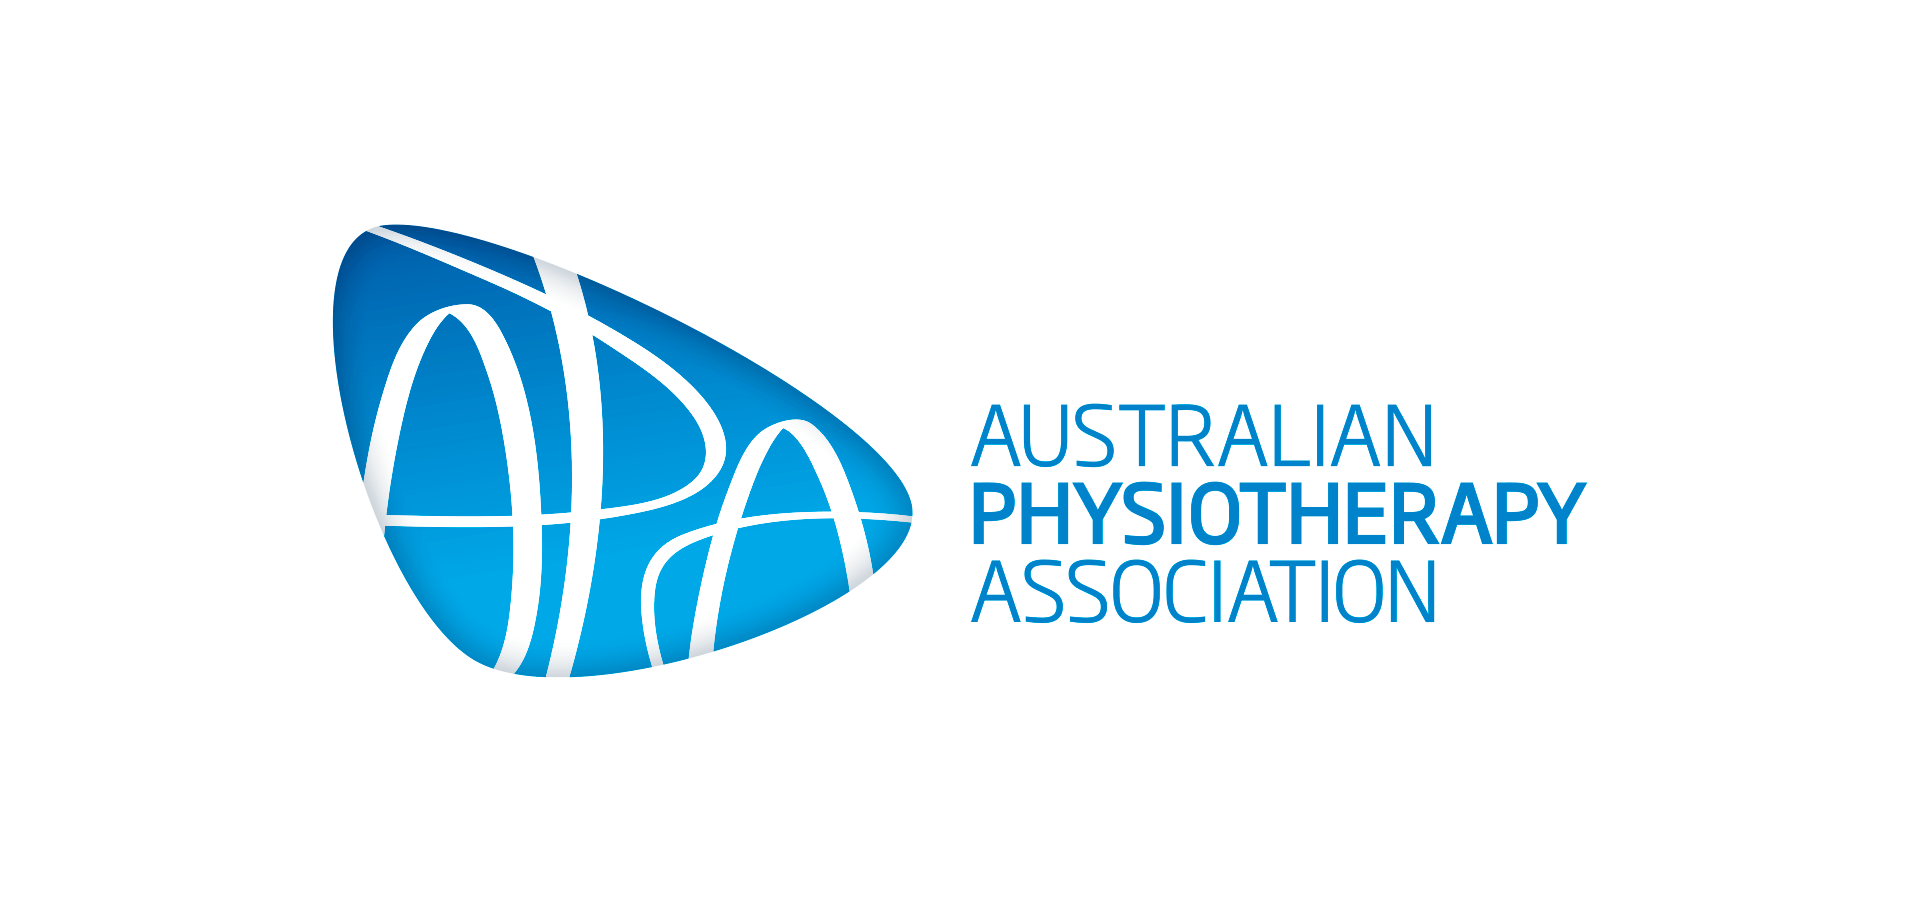 The APA logo